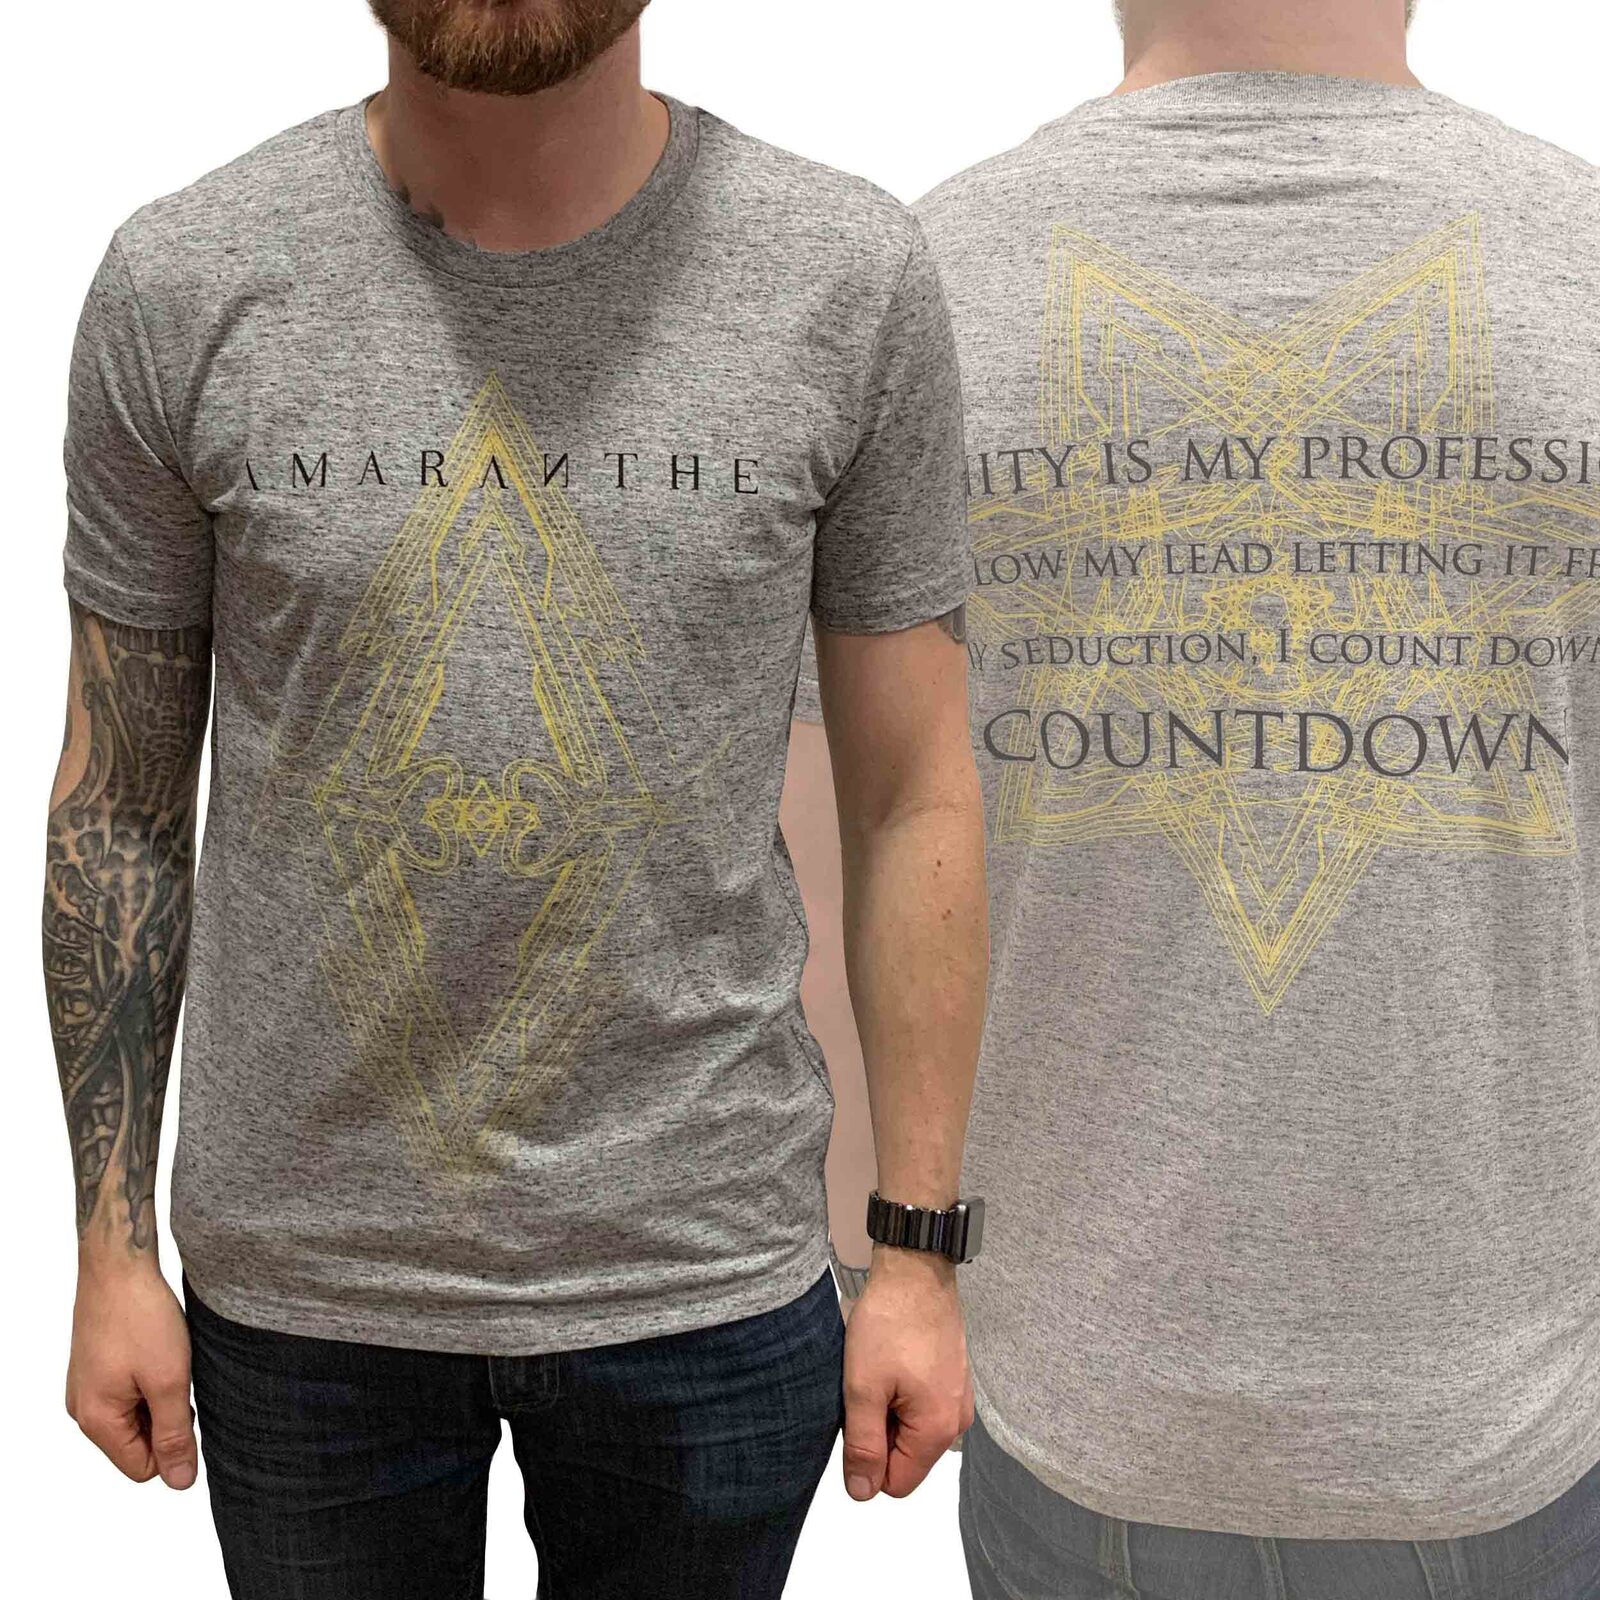 Countdown Light Shirt